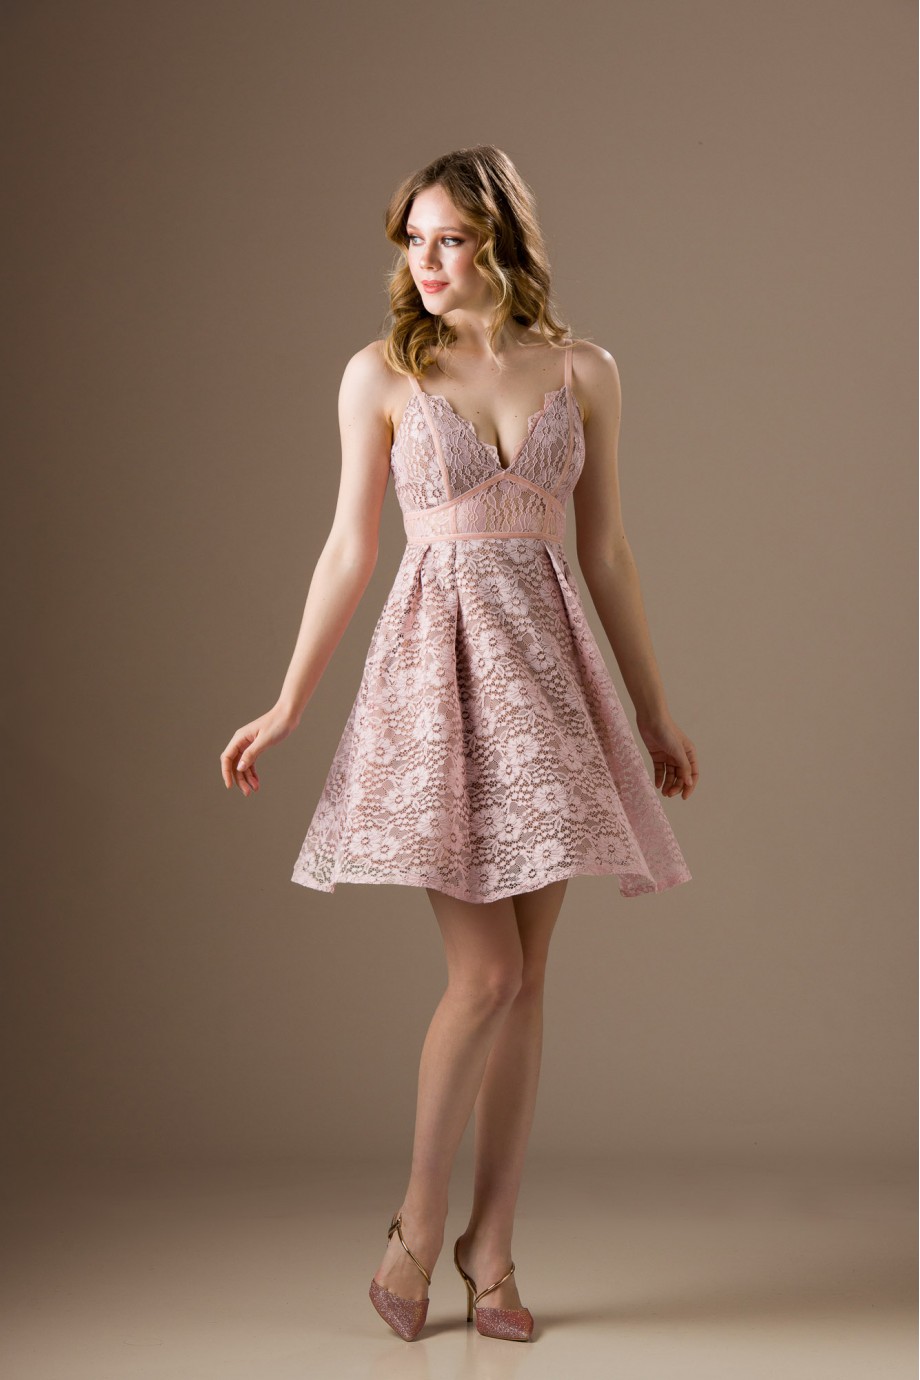 Kοντό ροζ nude φόρεμα με ντεκολτέ